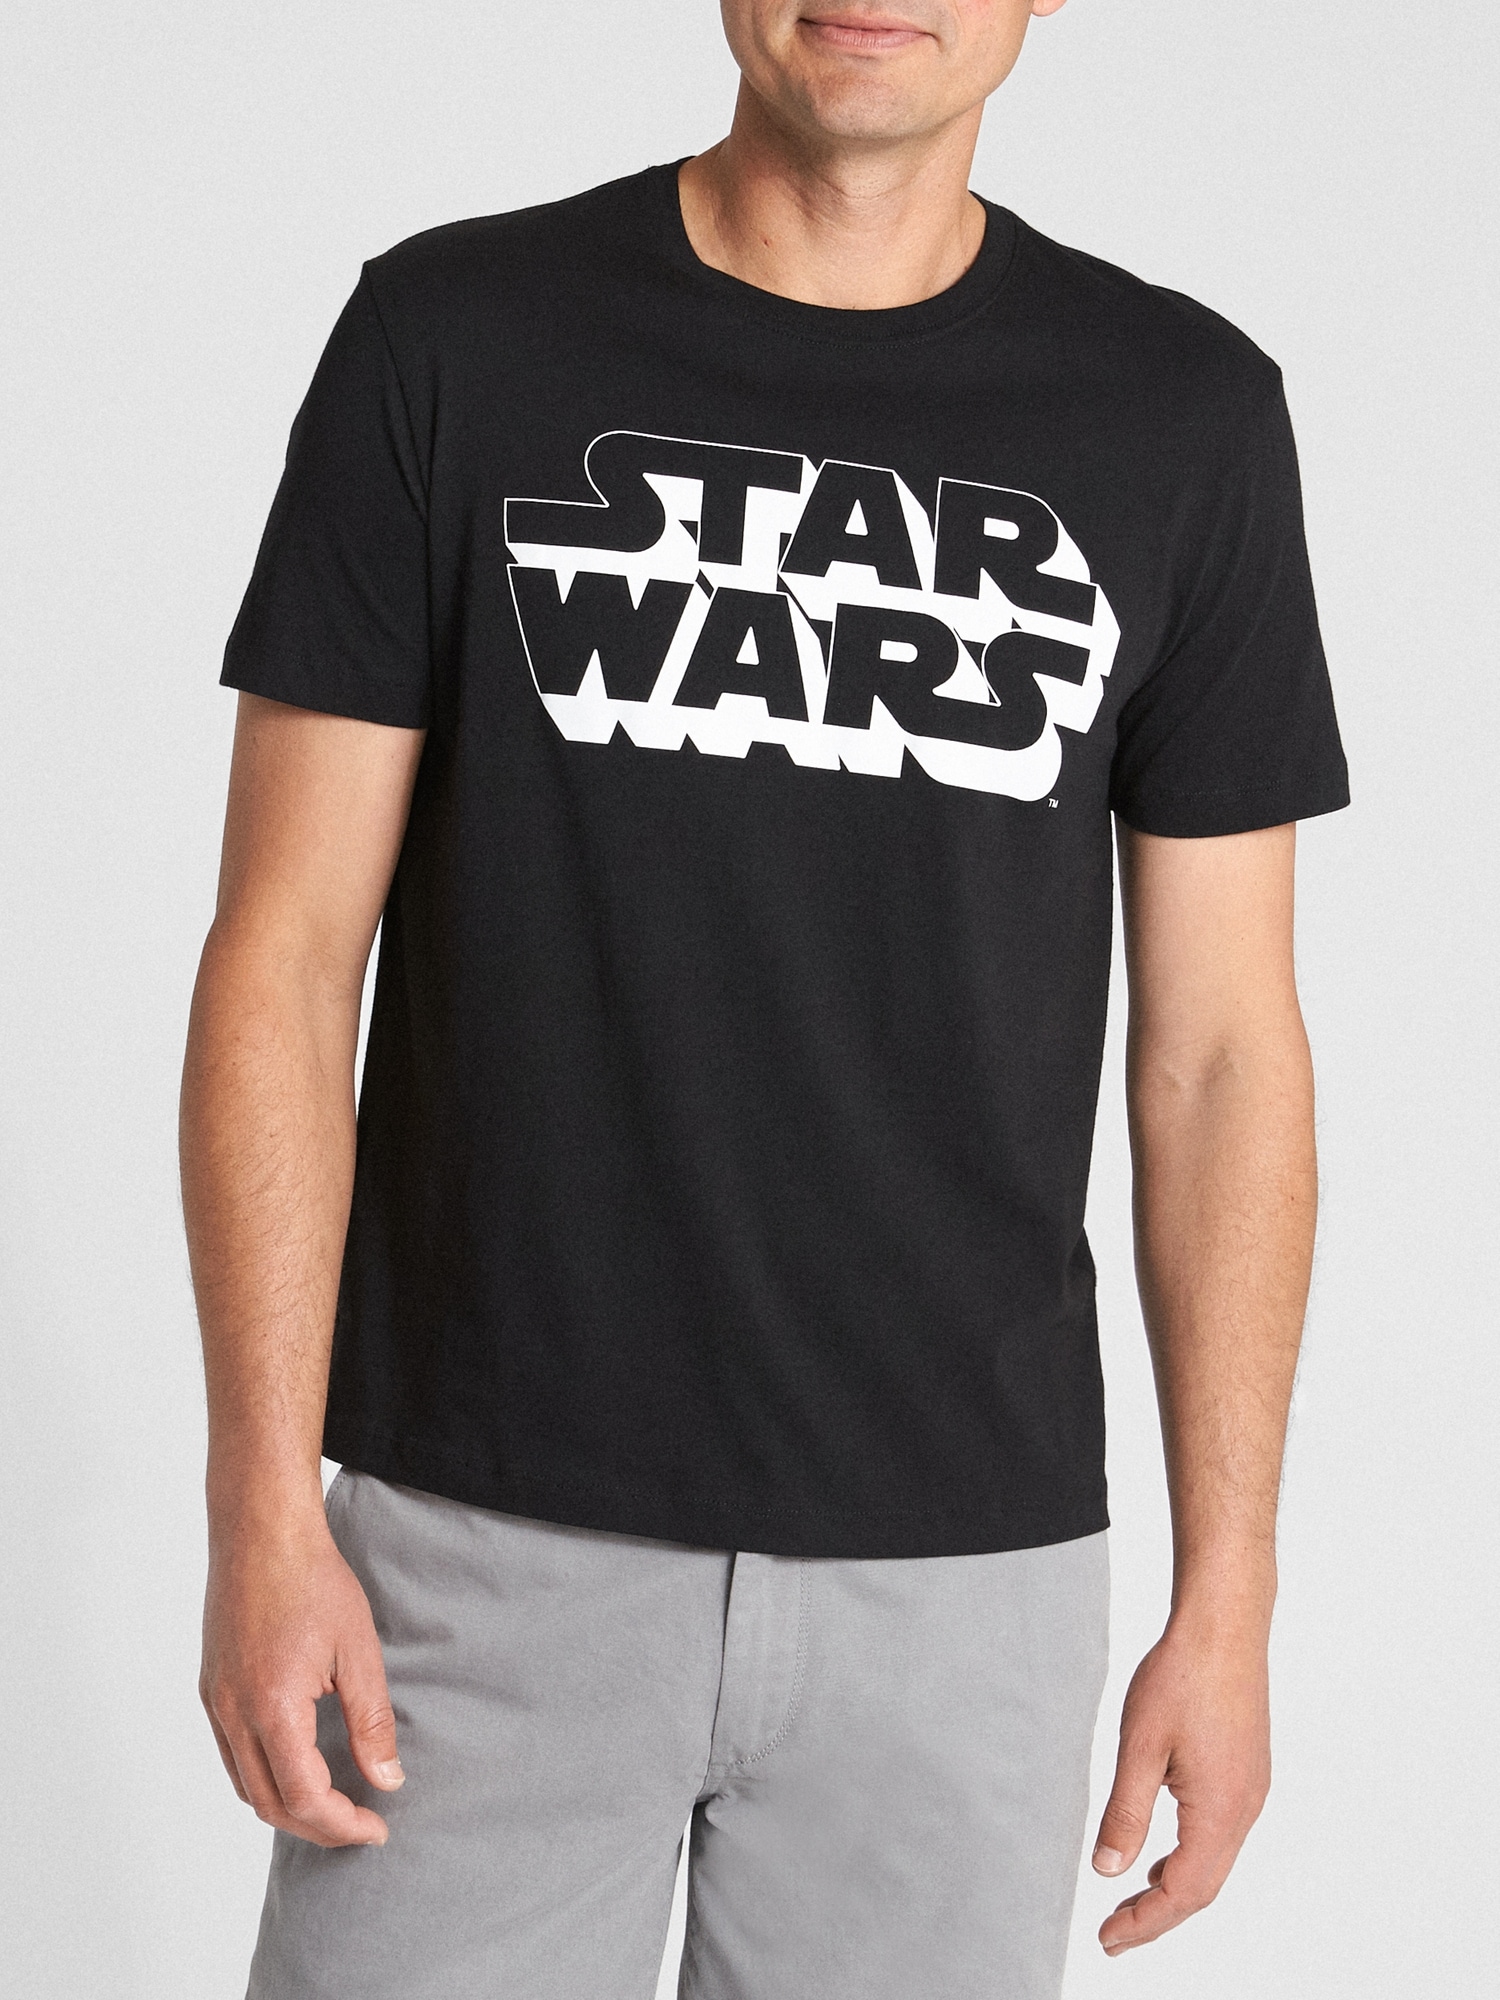 gap star wars shirt